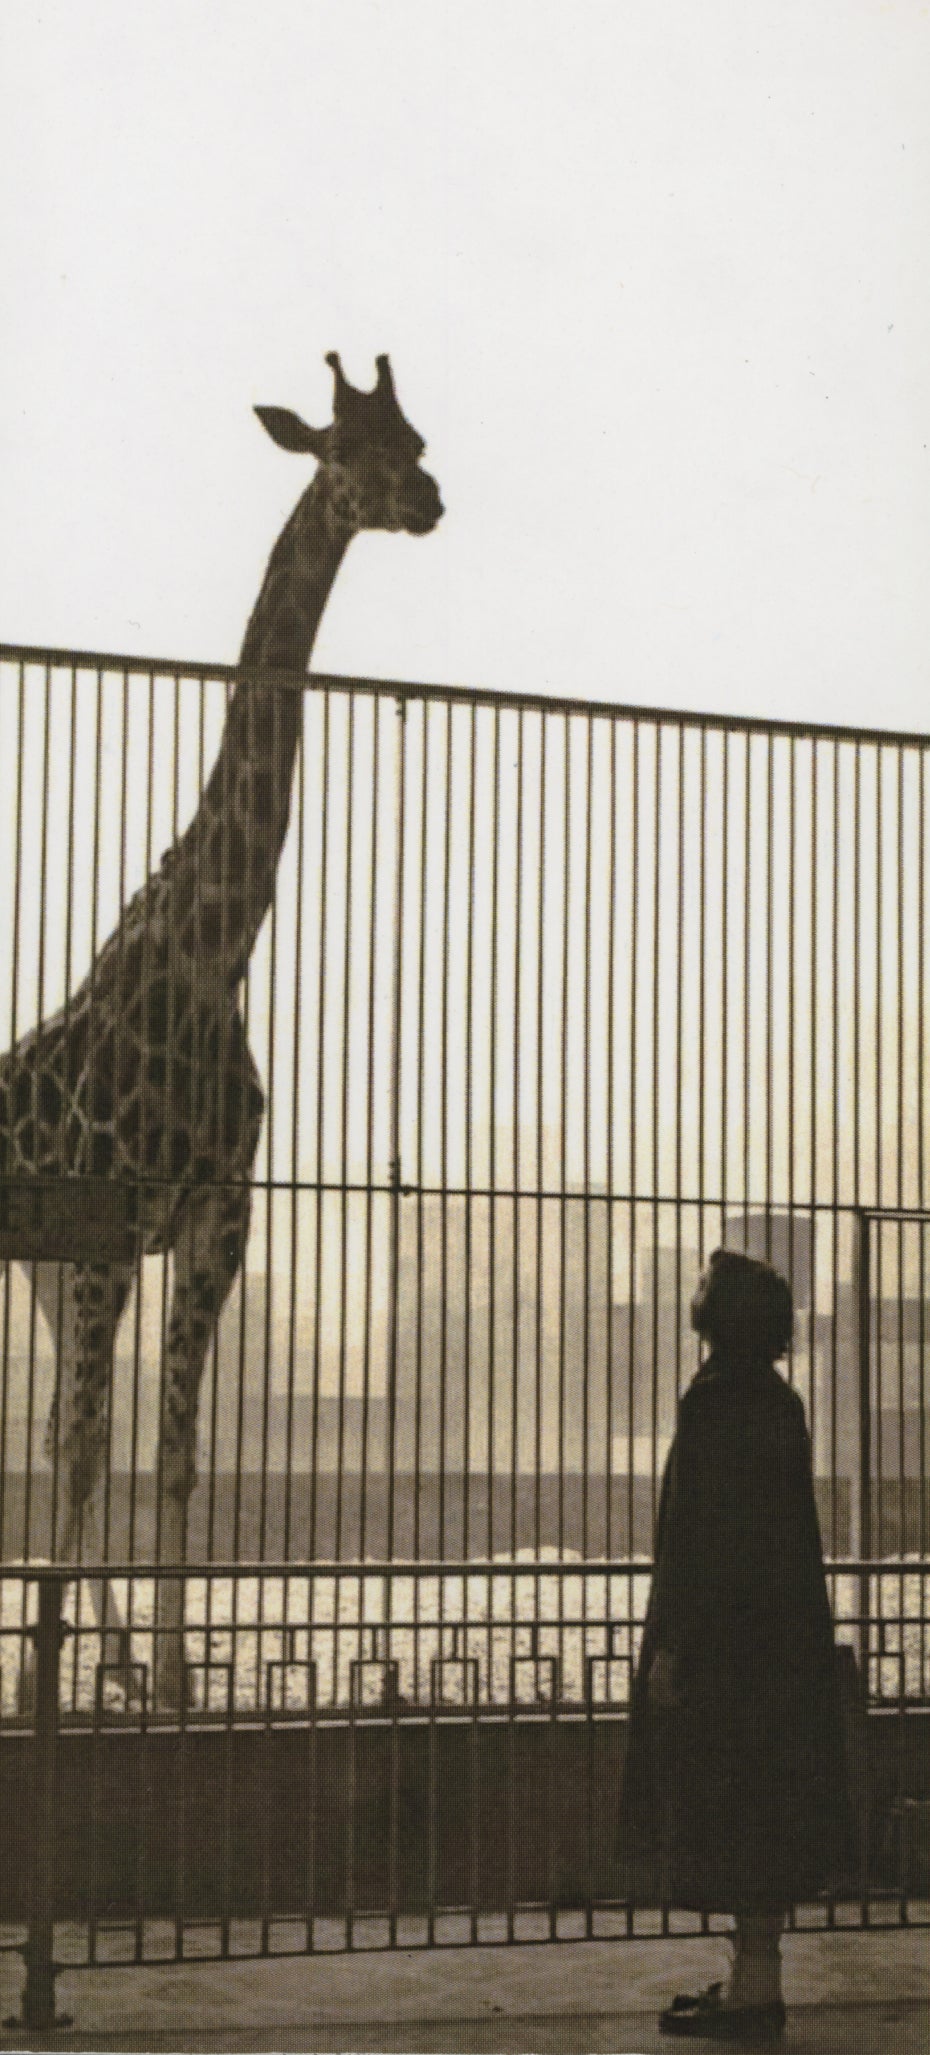 anne looking at giraffe in zoo